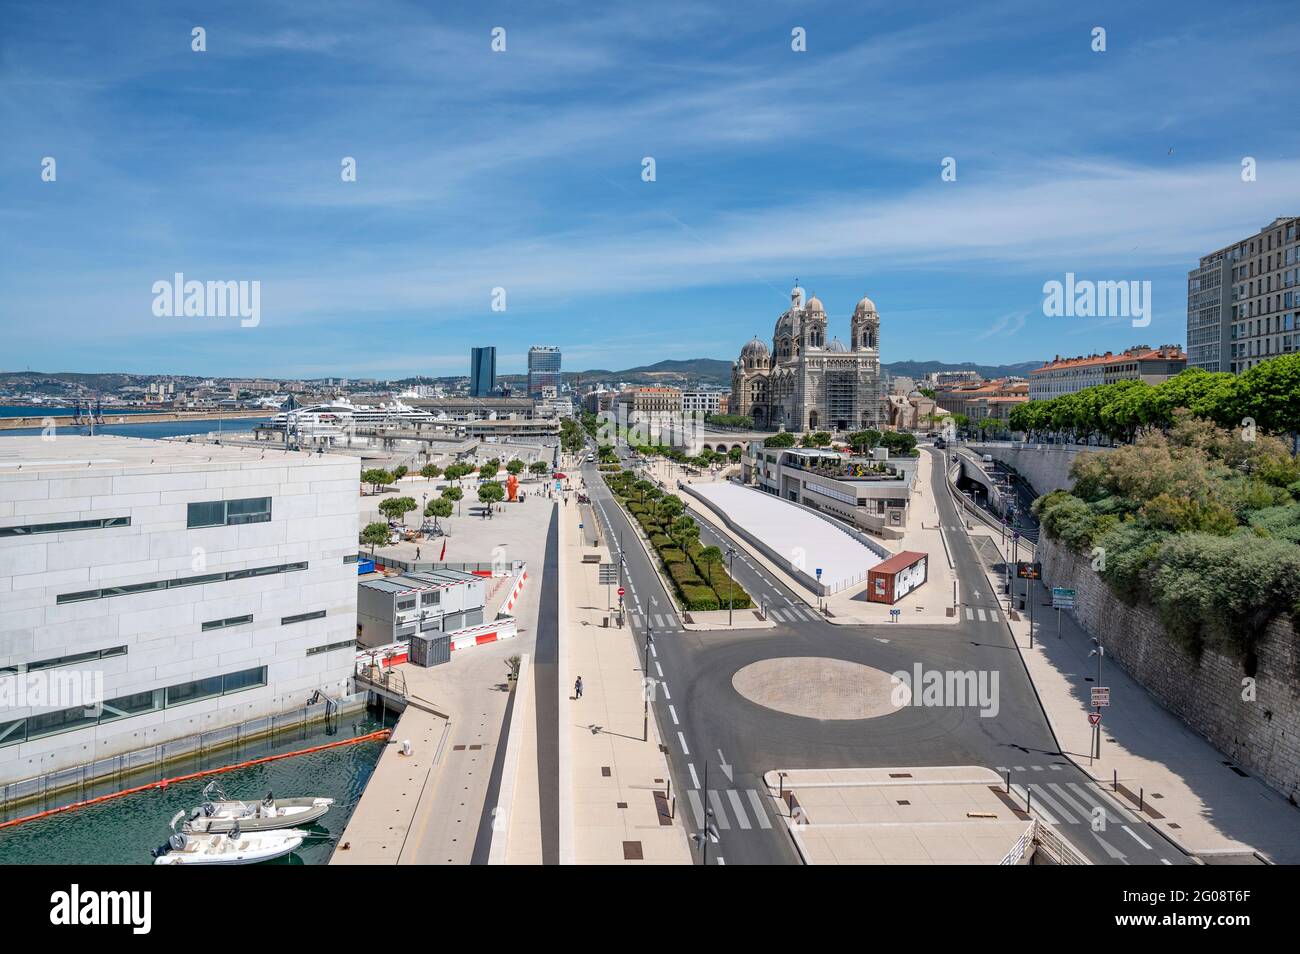 The view from the Fort Saint-Jean towards La Joliette and Villa Méditerranée, Marseille, France Stock Photo